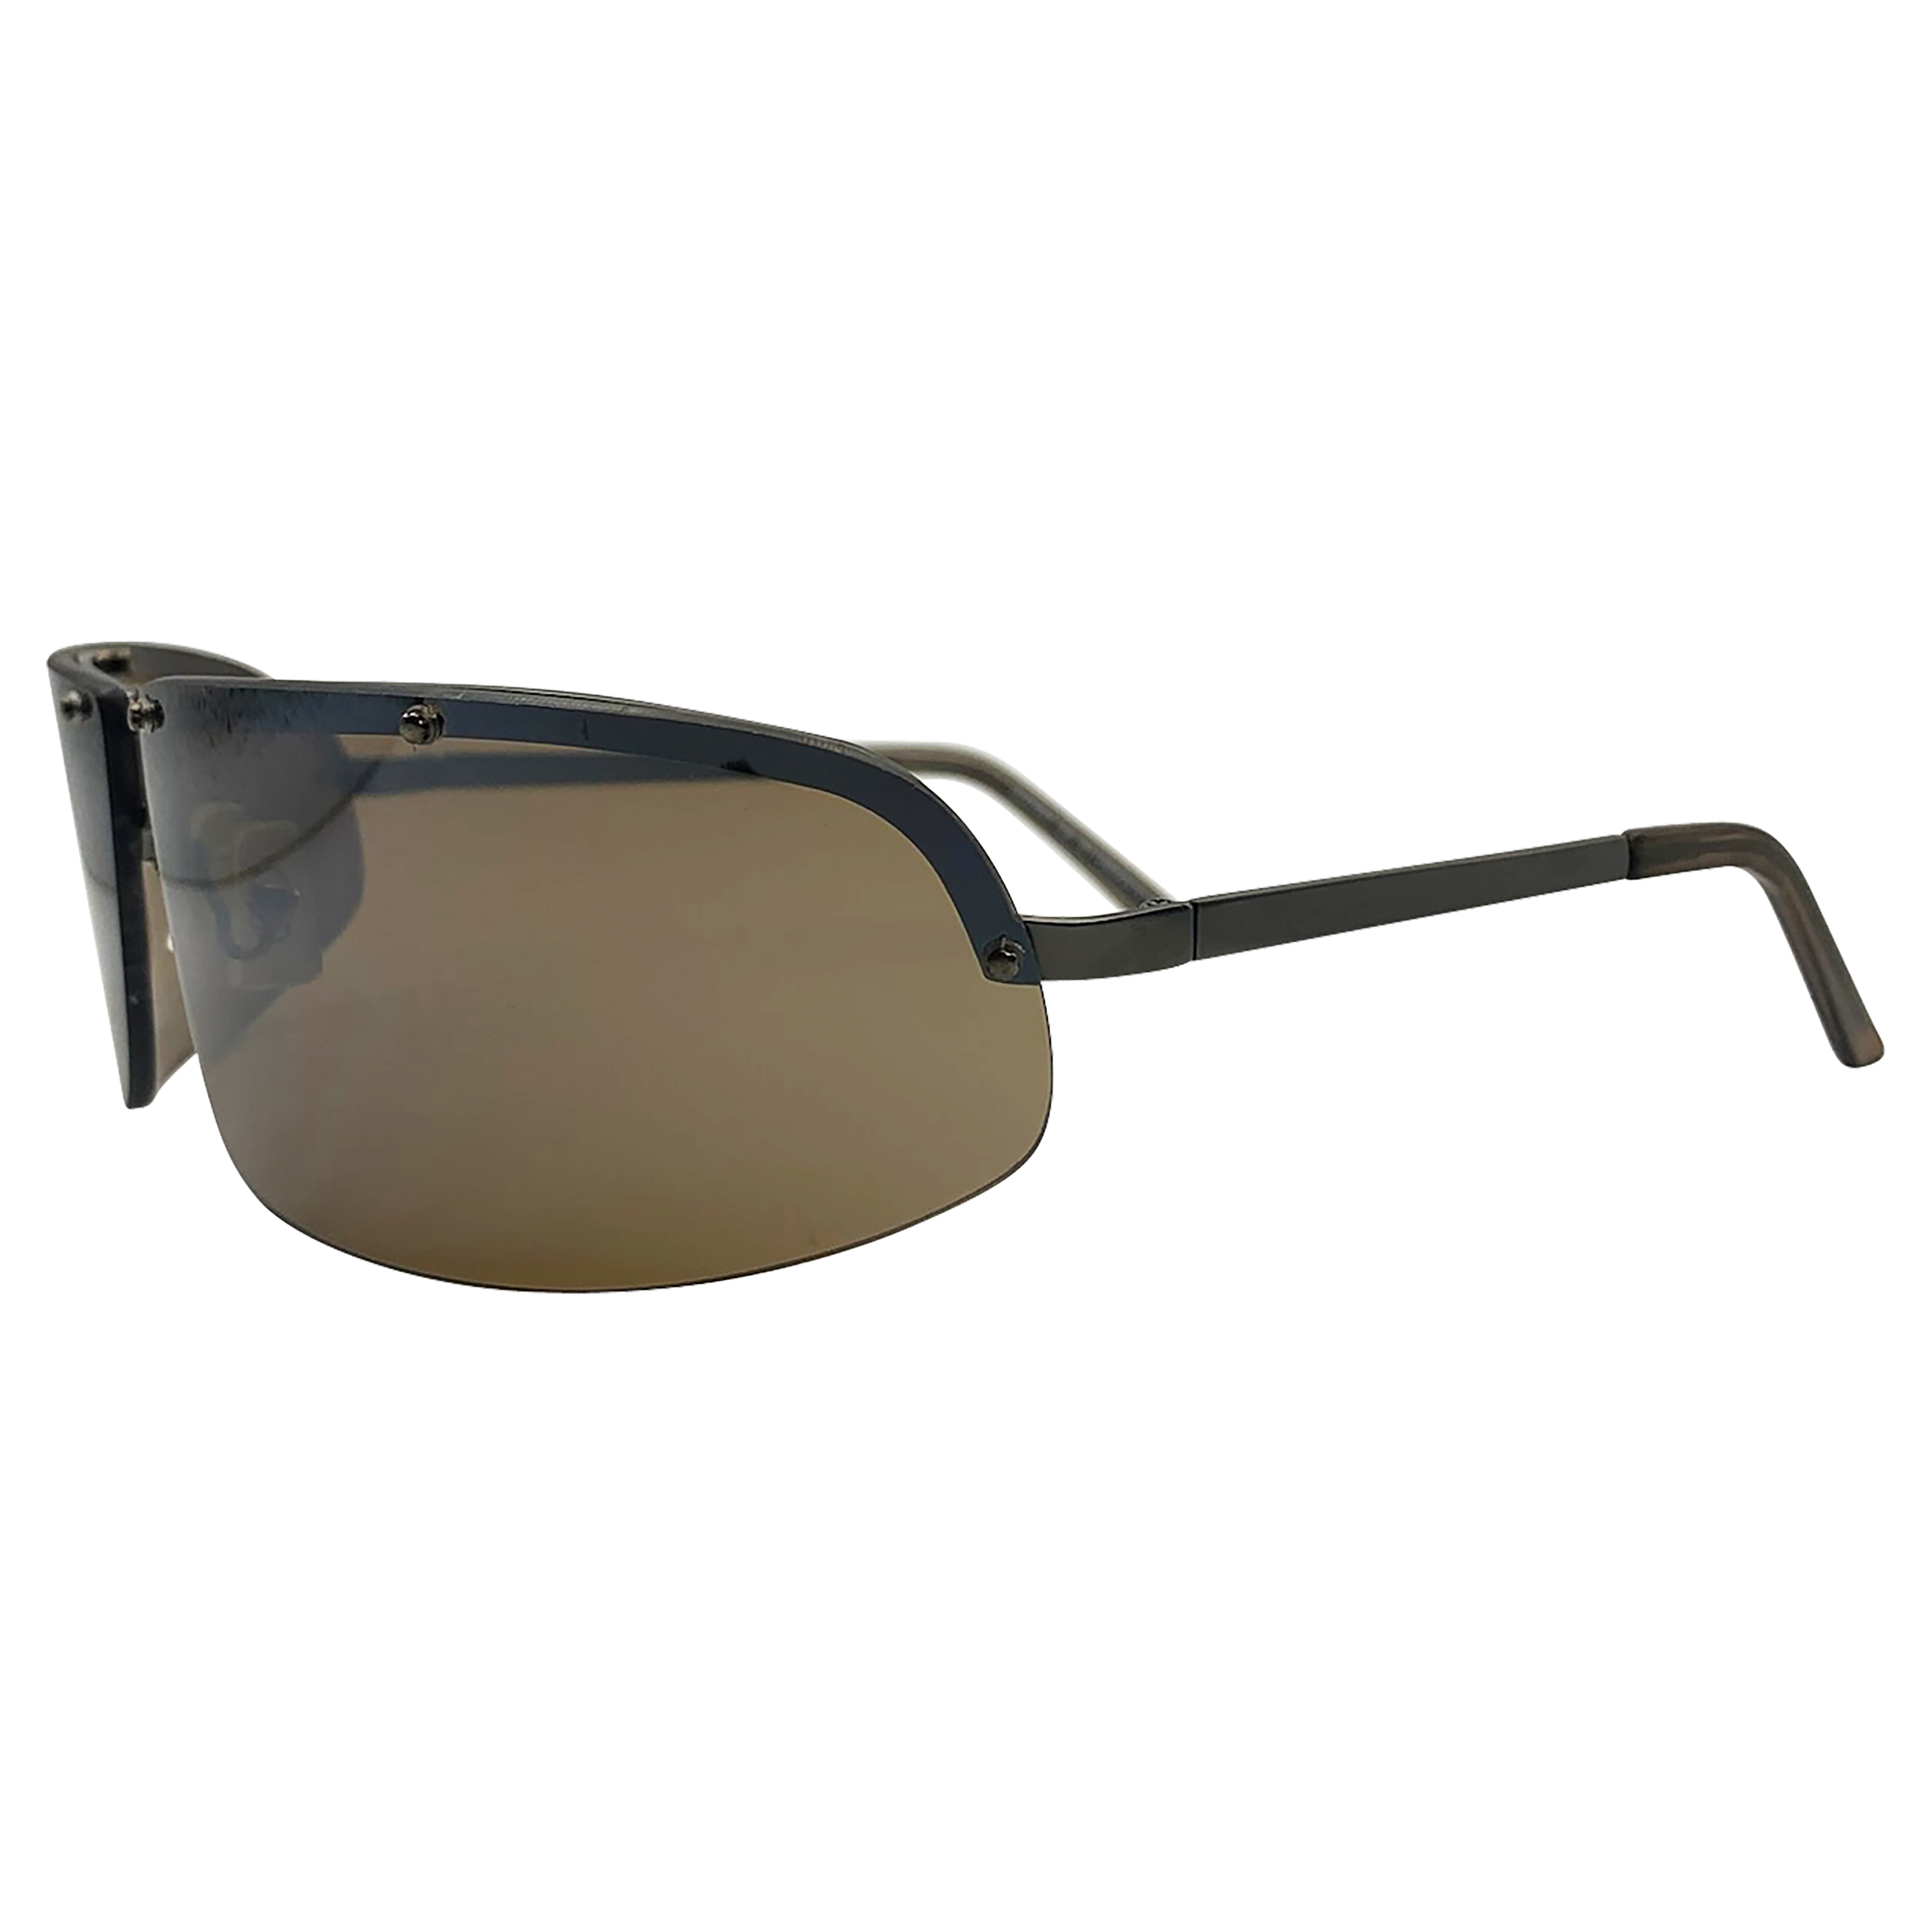 PRESSED Rimless Shield Sunglasses